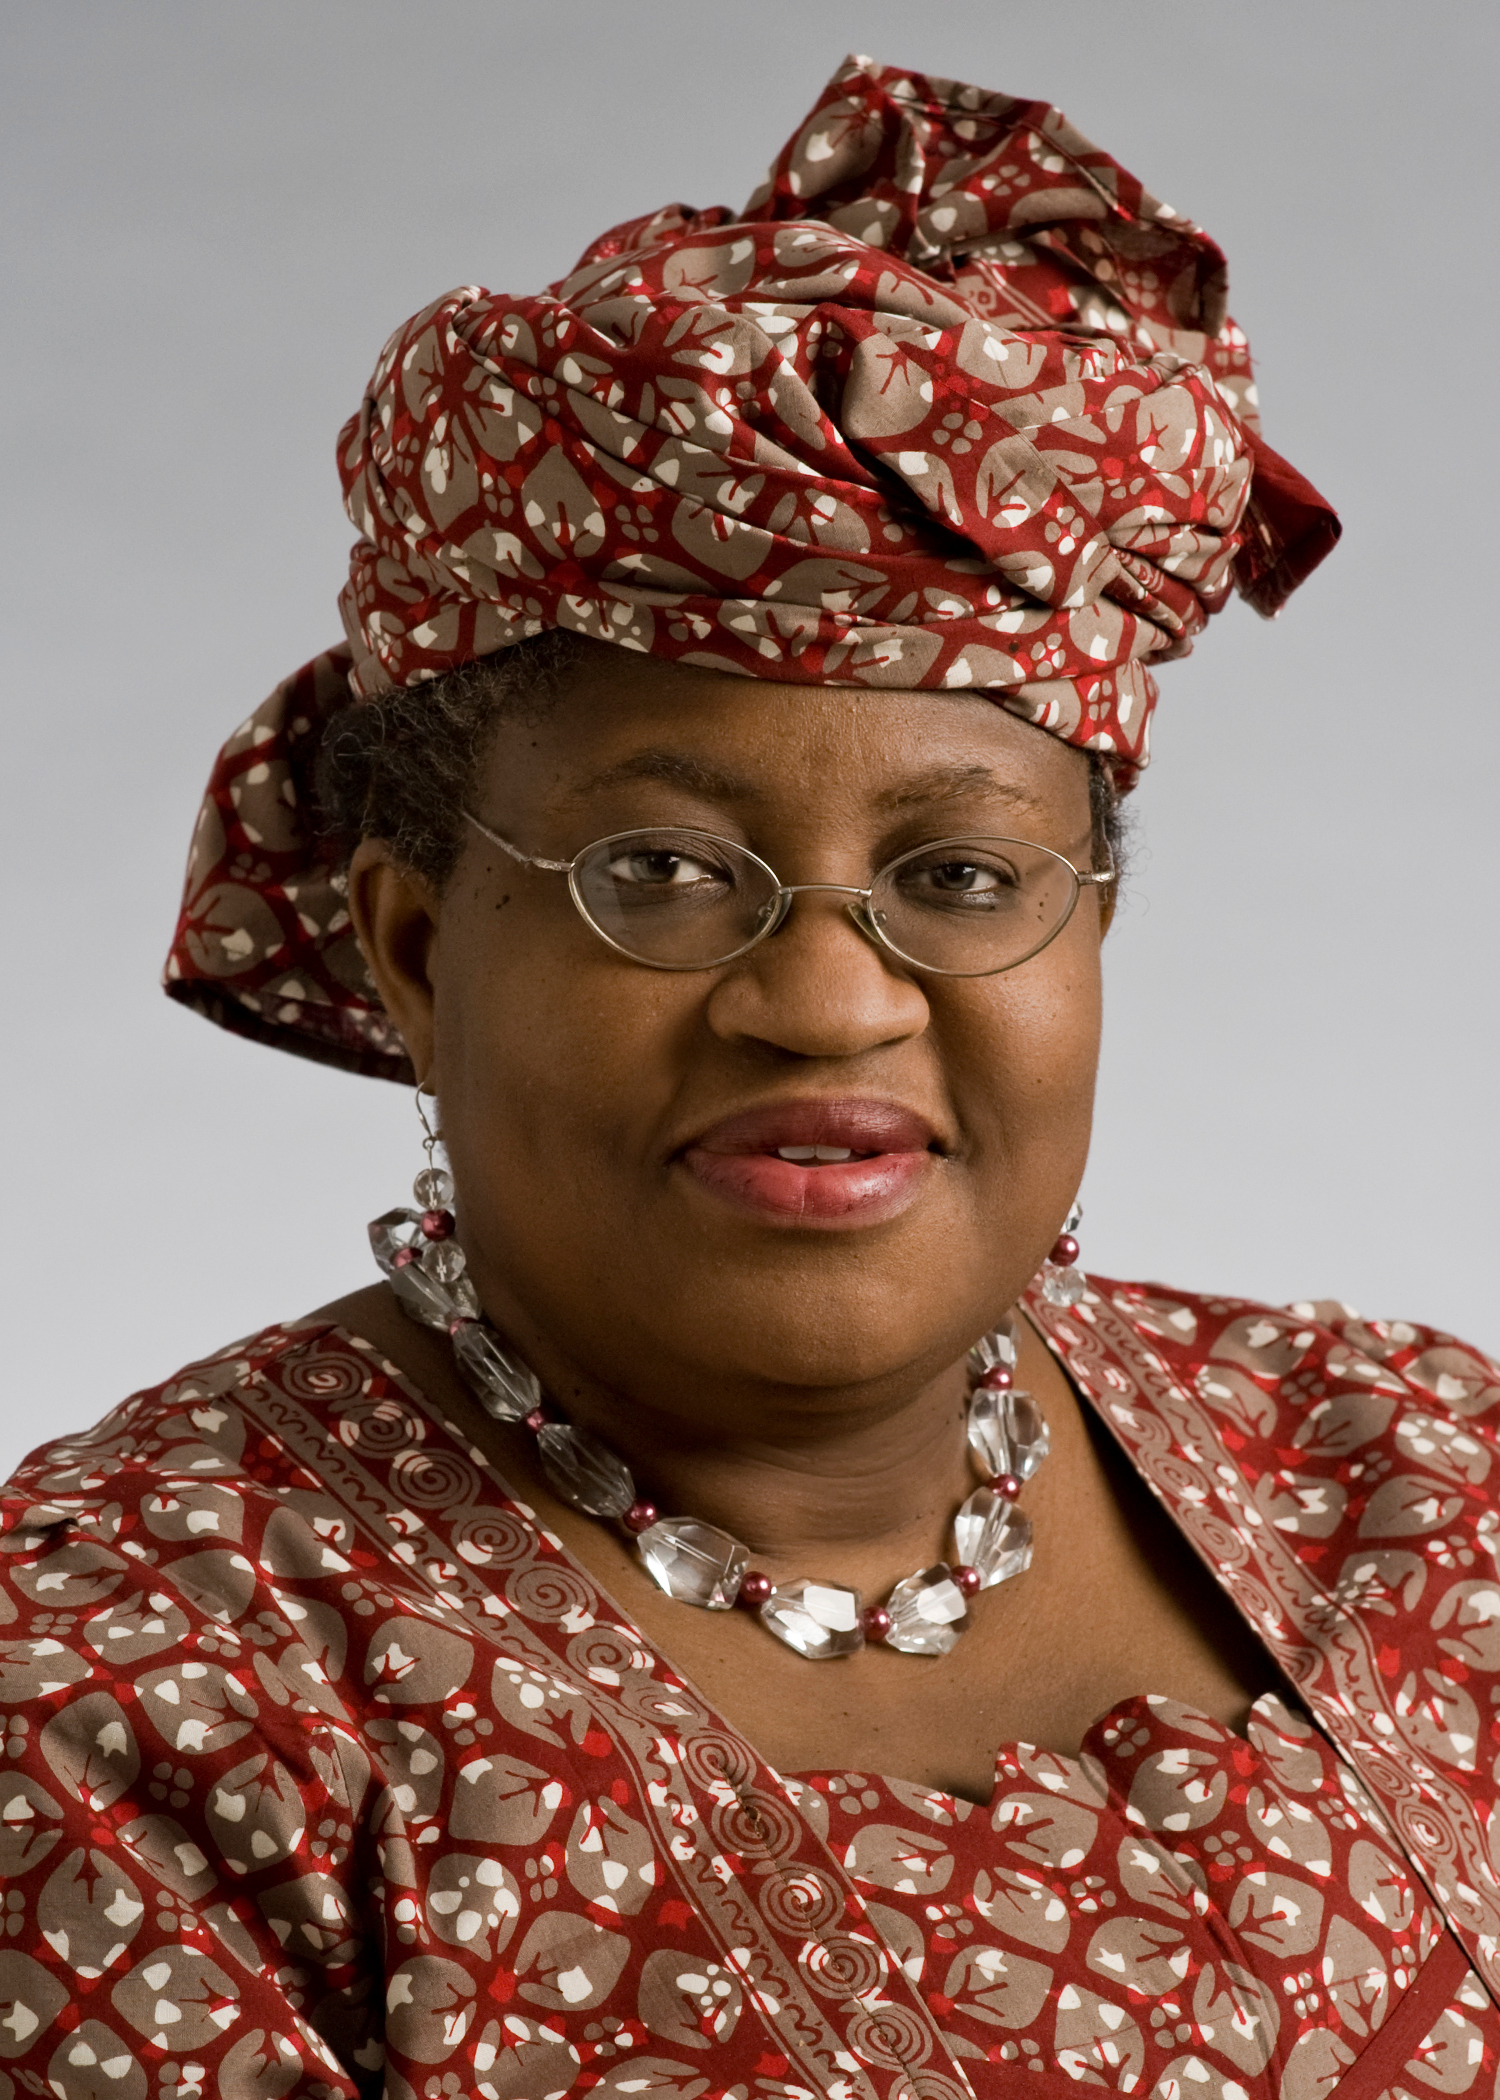 http://upload.wikimedia.org/wikipedia/commons/0/05/Okonjo-Iweala,_Ngozi_(2008_portrait).jpg